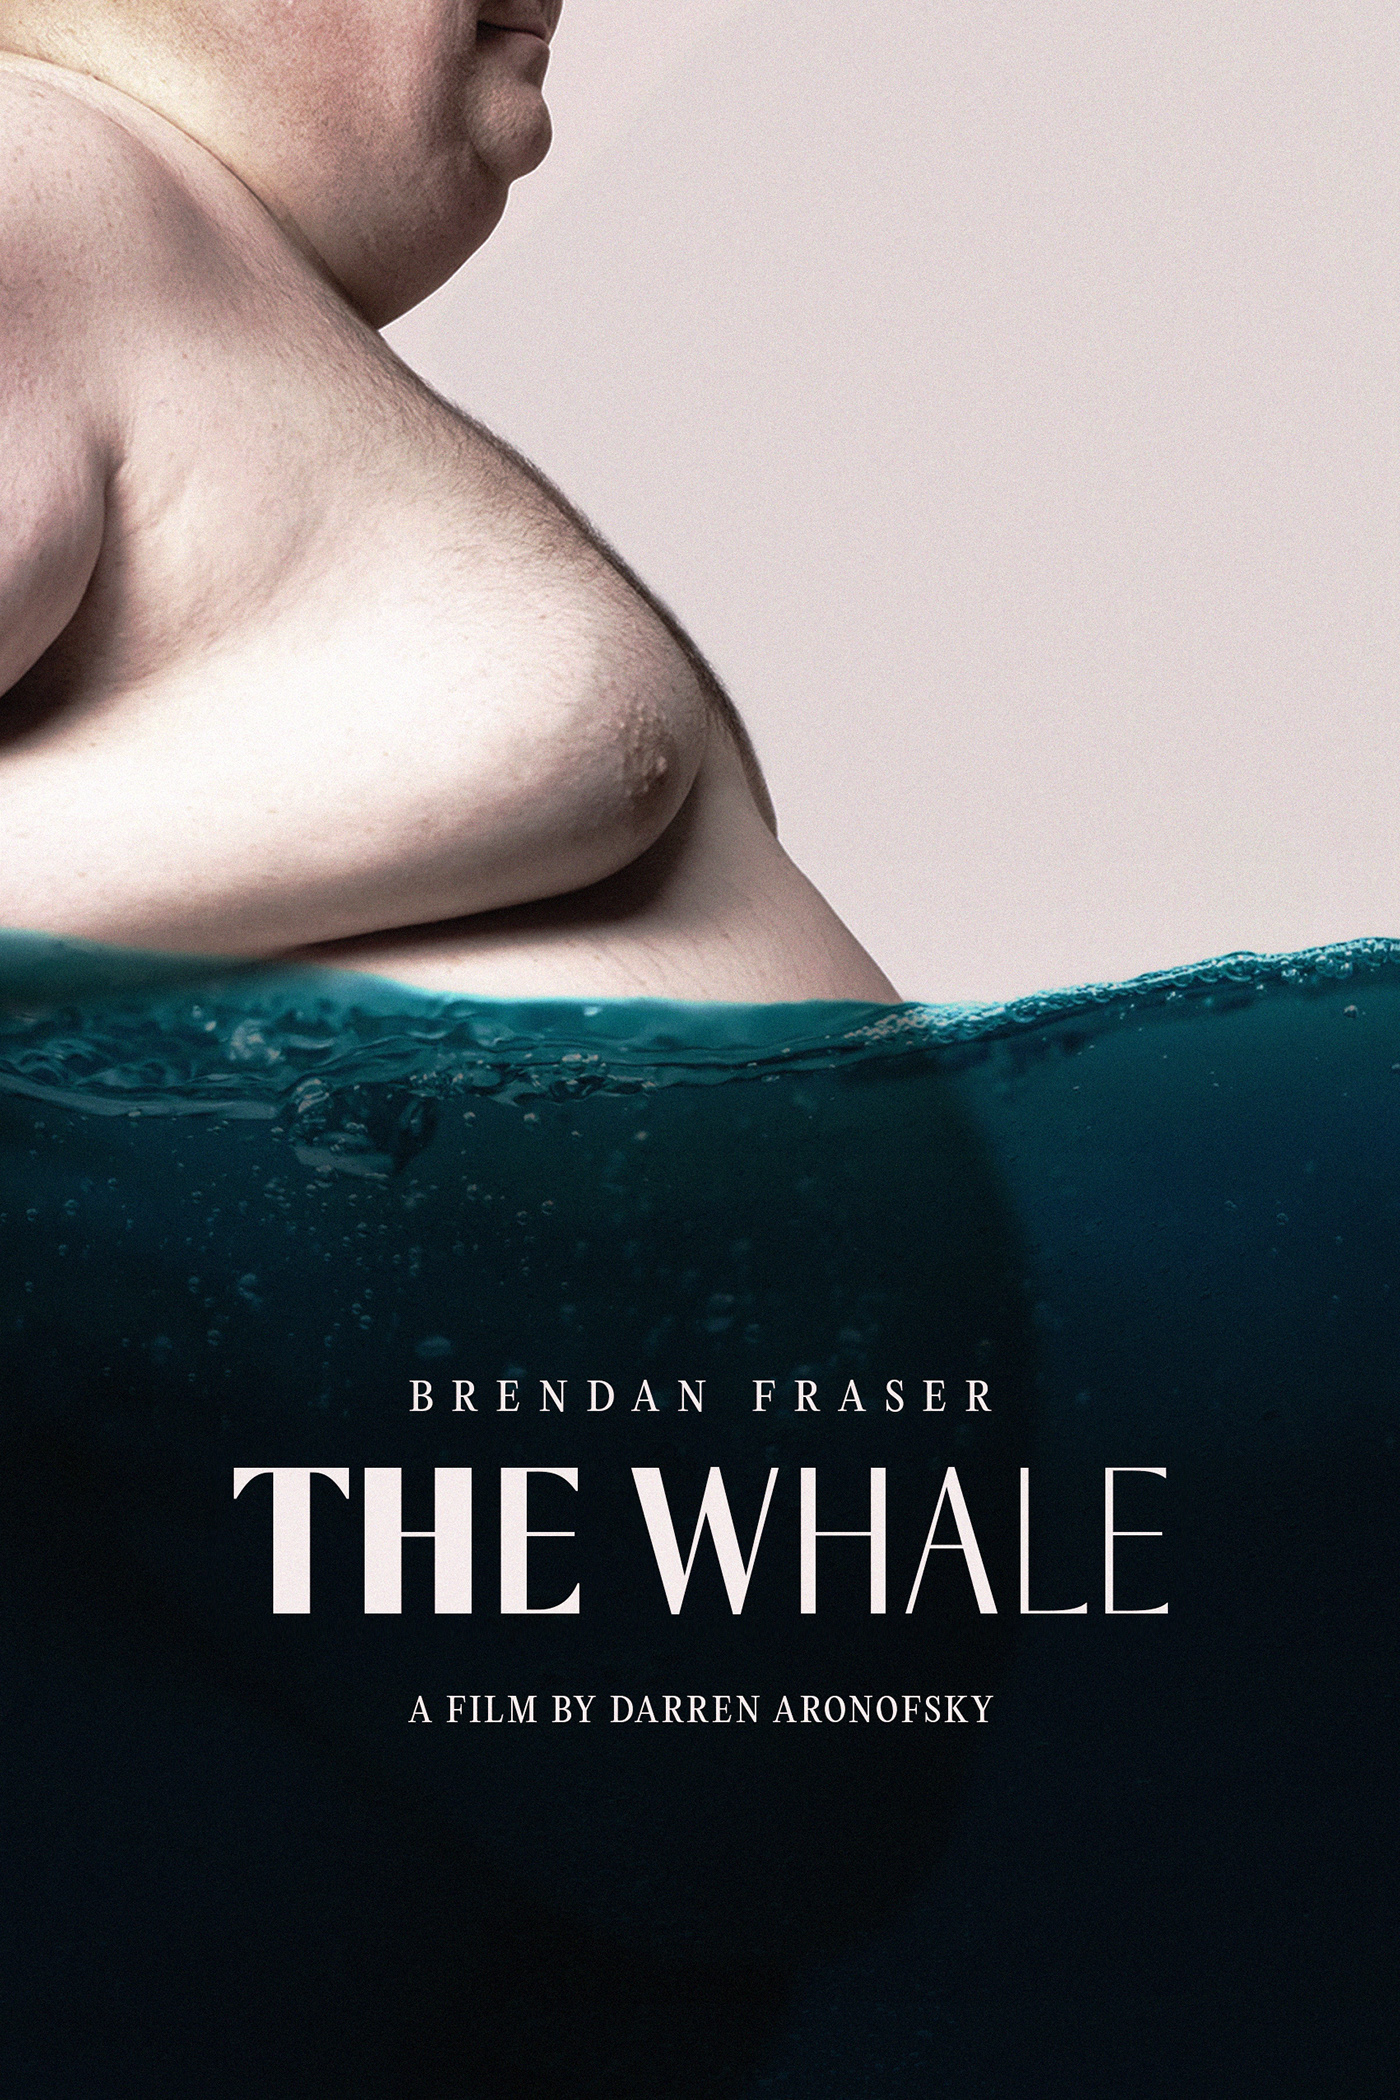 Darren Aronofsky's 'The Whale'